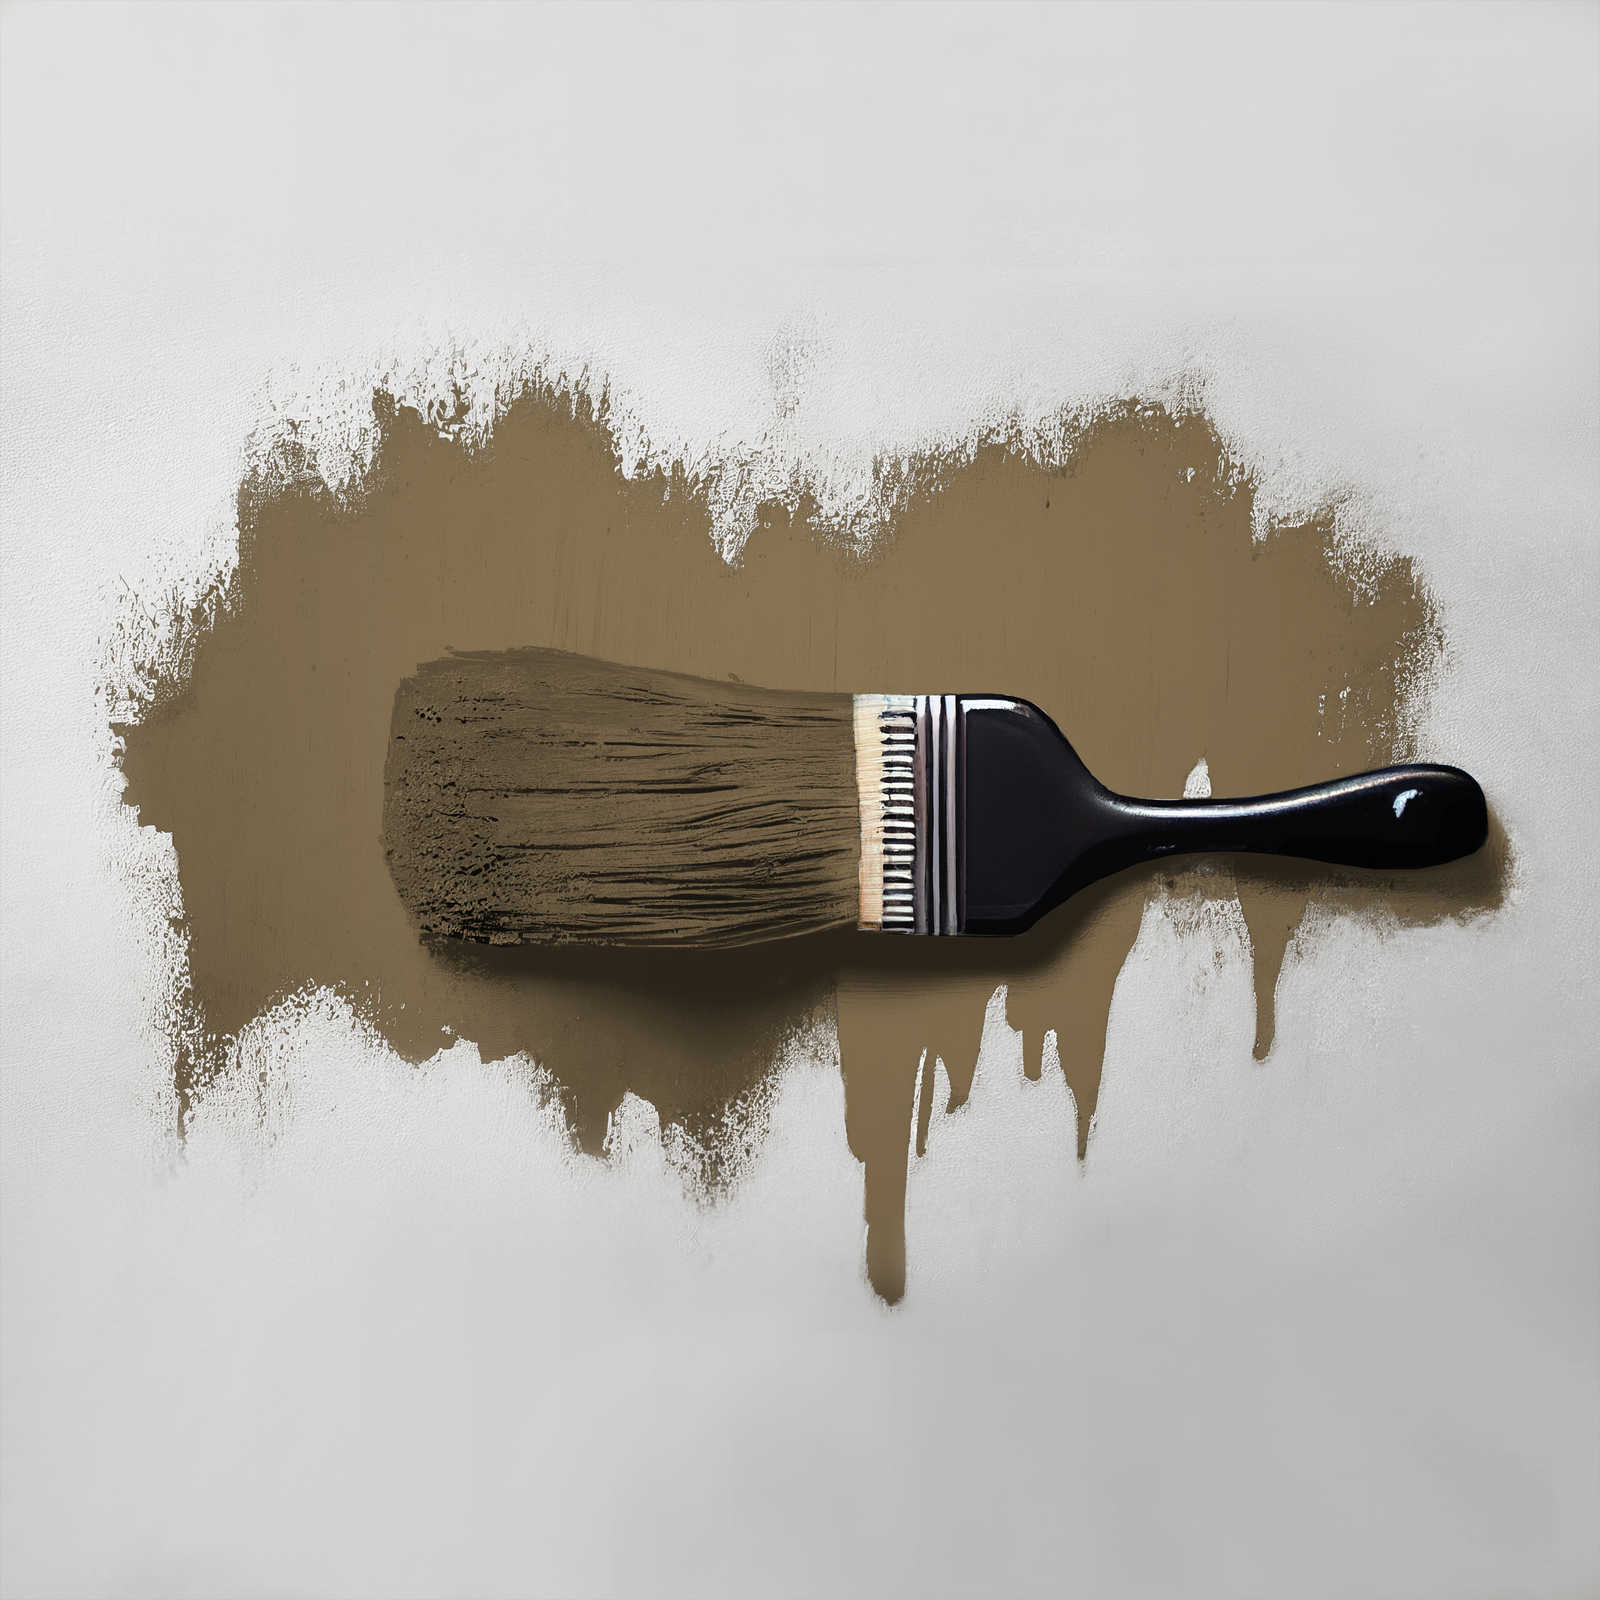             Wandfarbe in tiefem Braun »Tasty Truffle« TCK6014 – 5 Liter
        